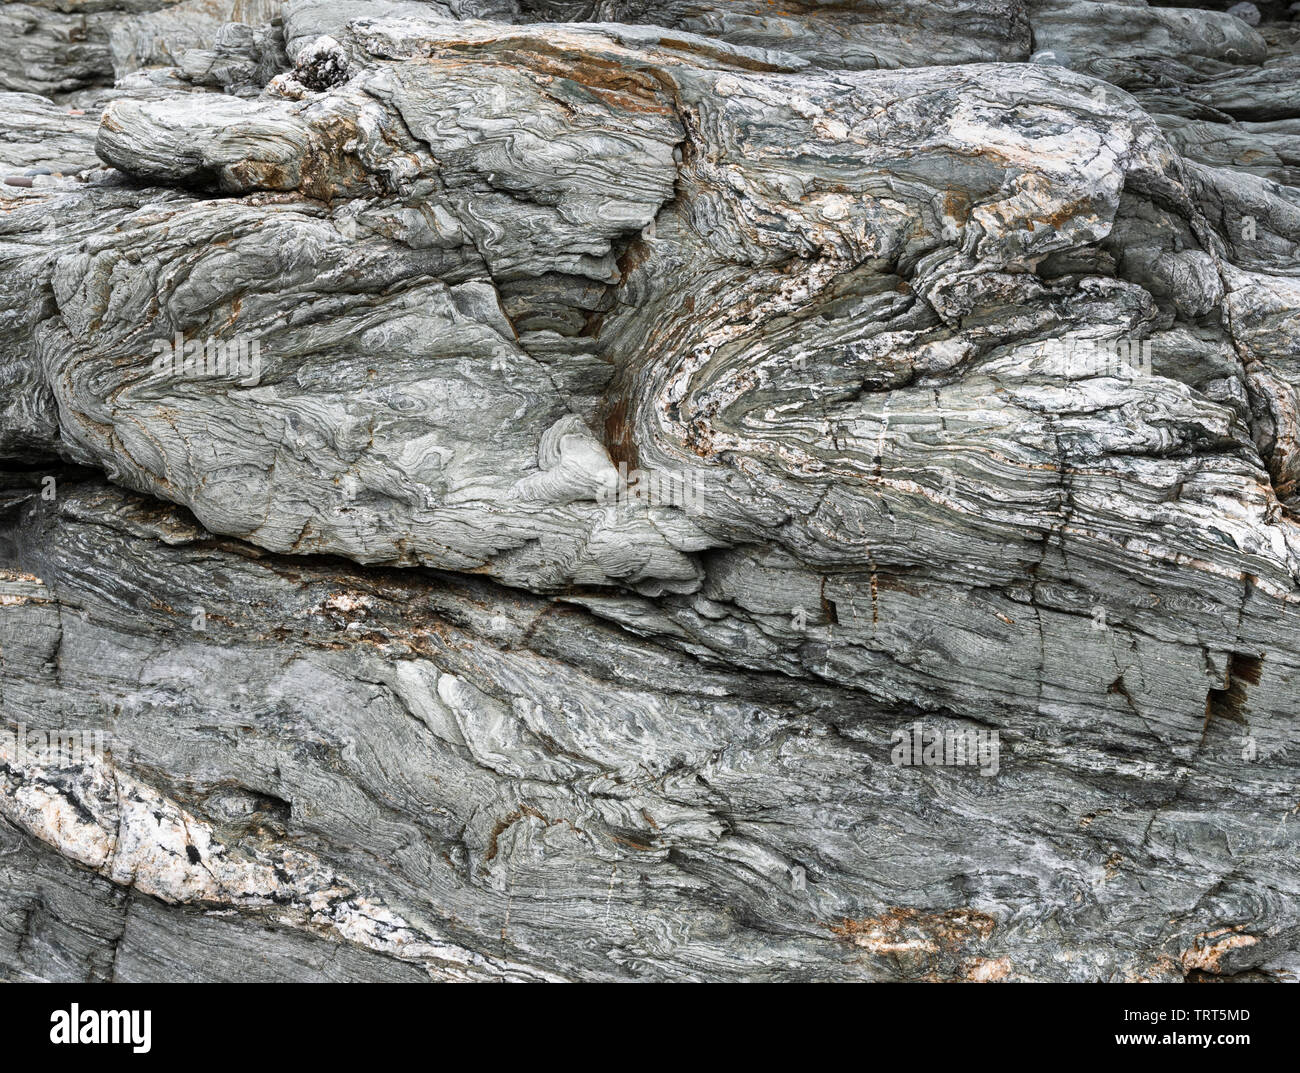 Highly deformed rocks at Trearddur Bay near Holyhead, Anglesey, Wales Stock Photo